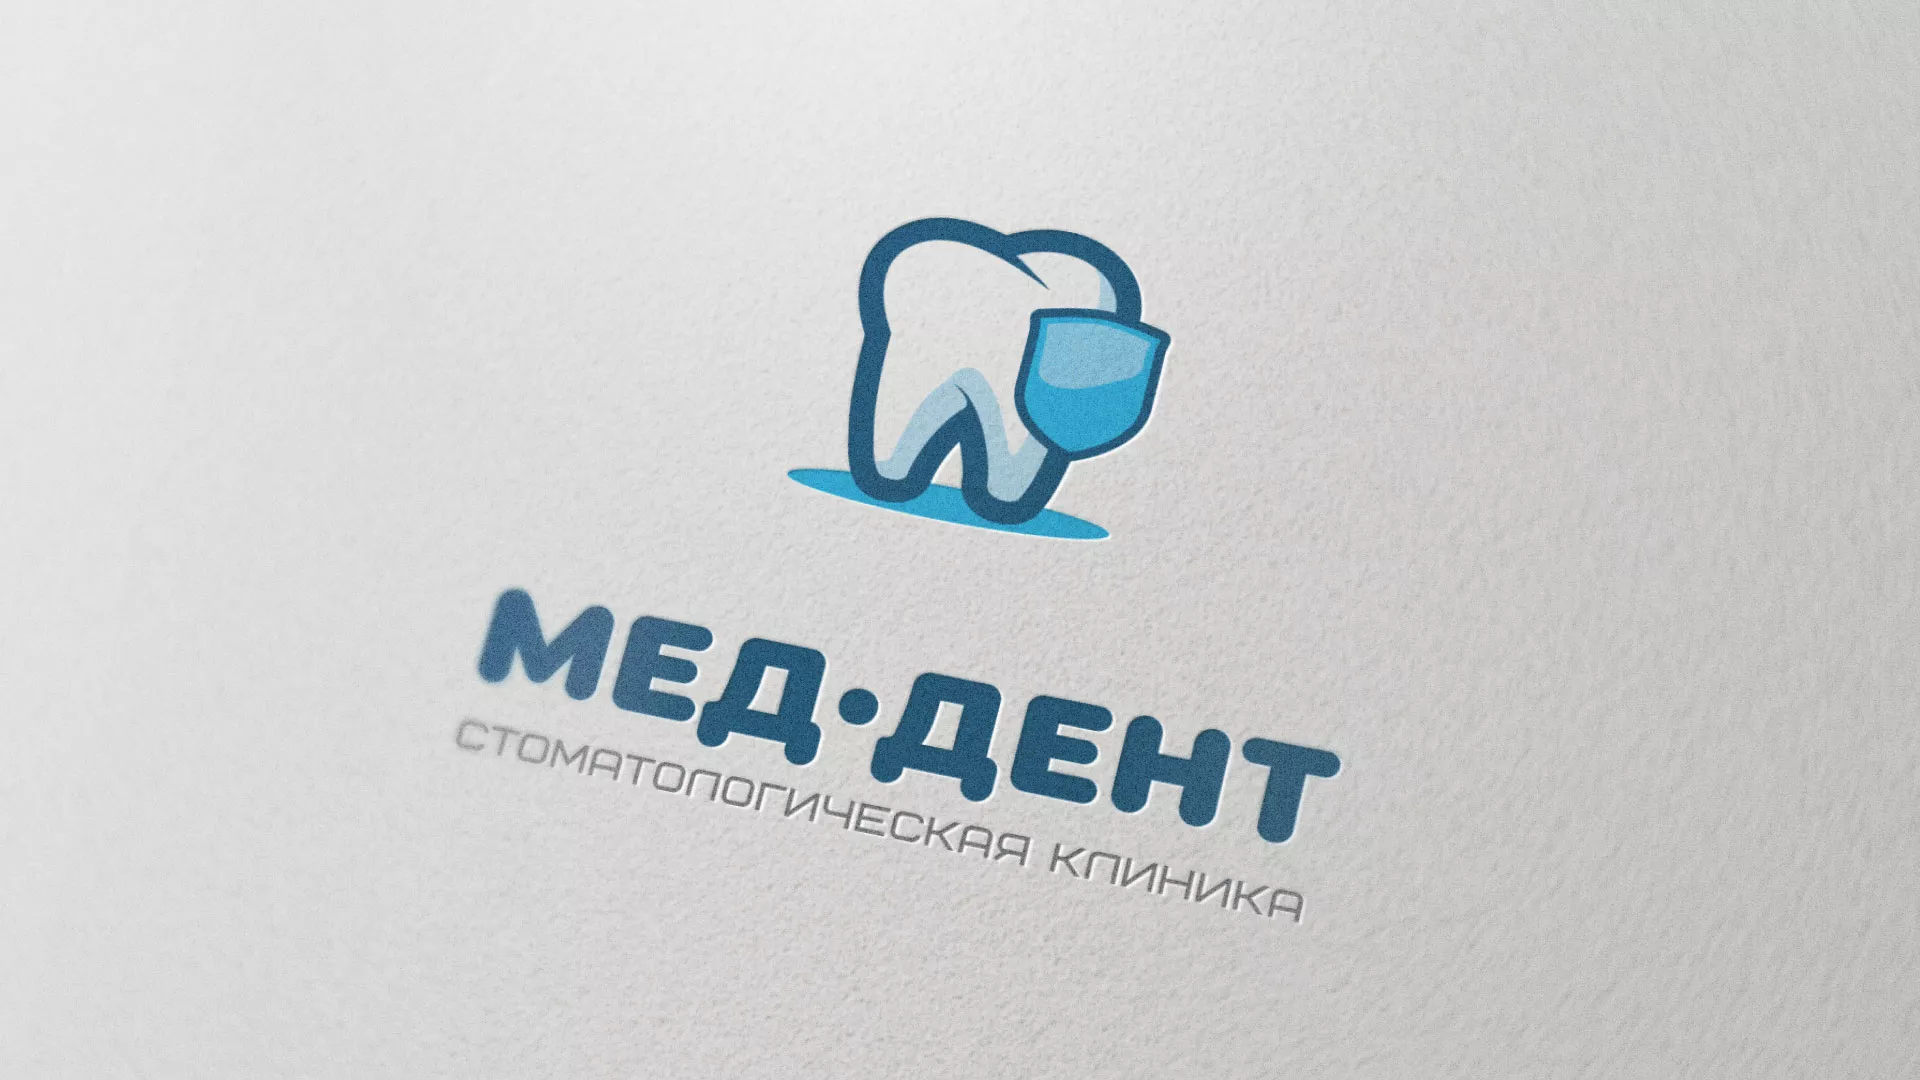 Разработка логотипа стоматологической клиники «МЕД-ДЕНТ» в Навашино